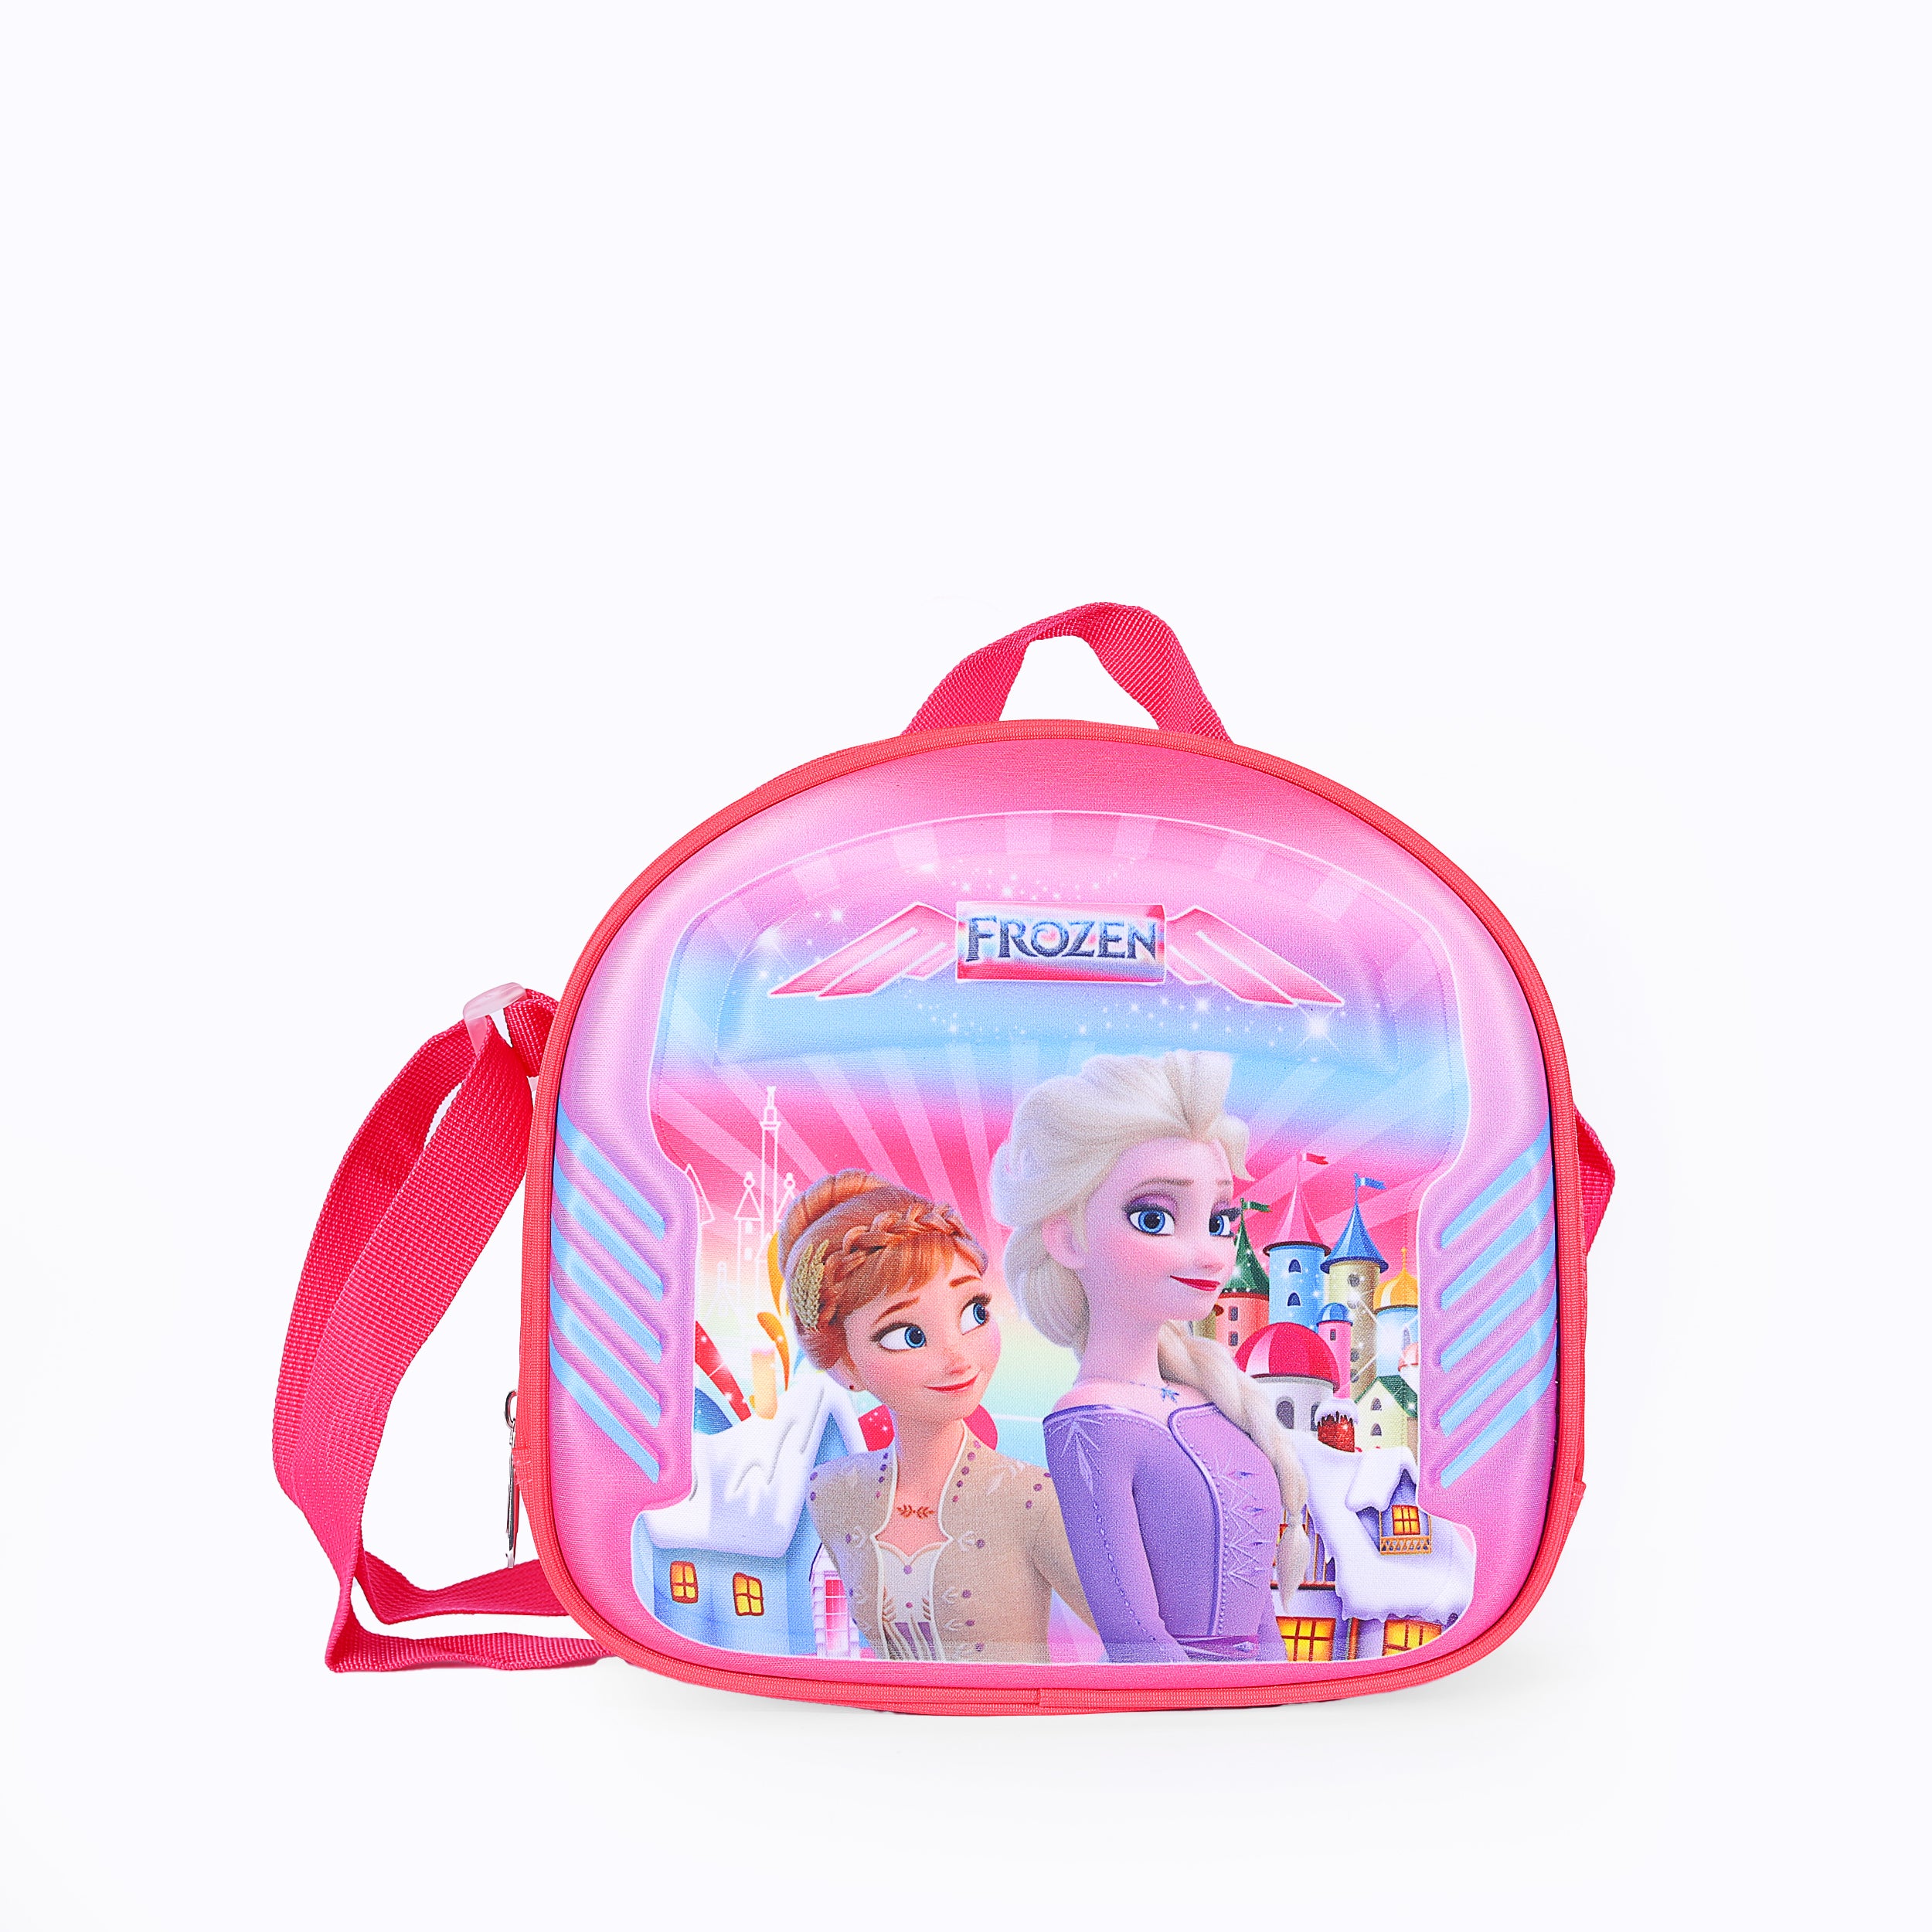 Frozen Lunch Bag For Girls